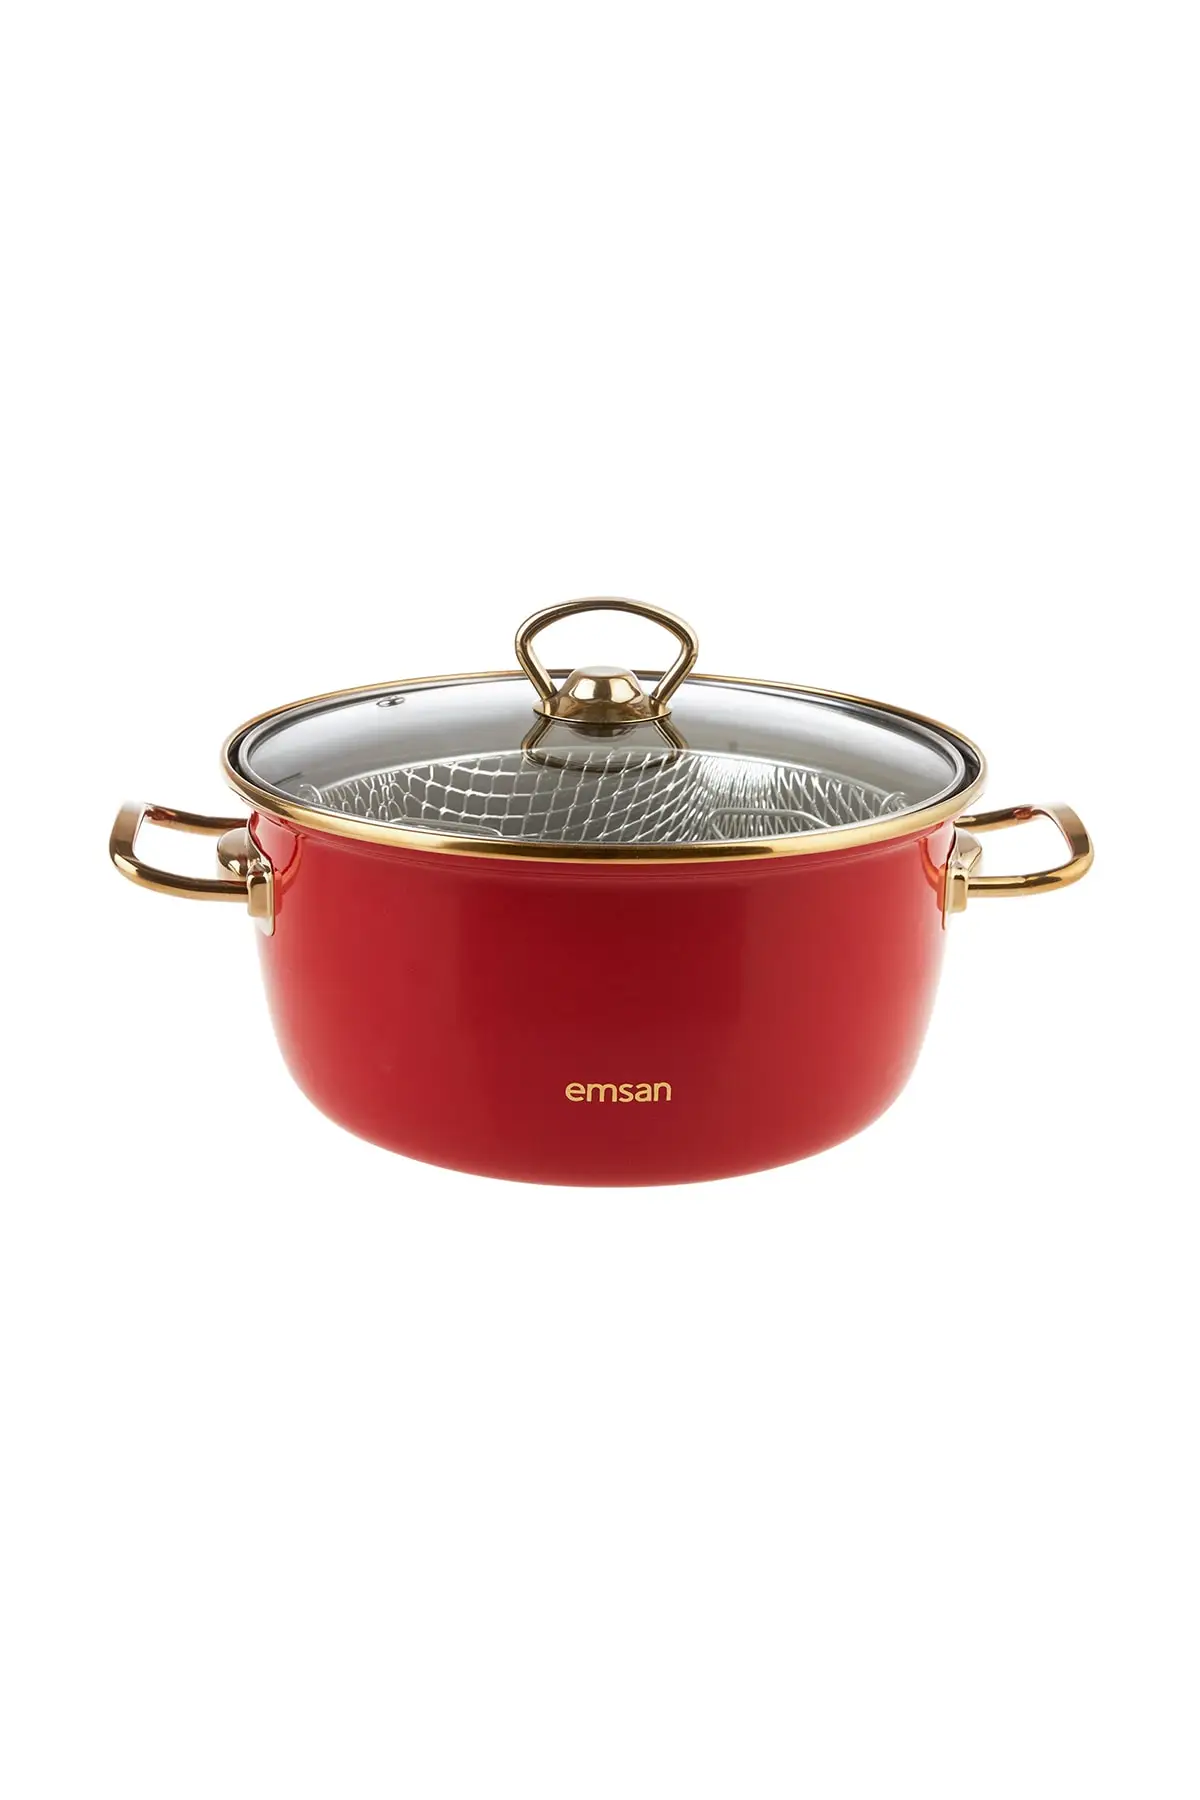 https://ae01.alicdn.com/kf/S35c24df4612548e8ae22b91843a58402j/DOLBOVI-nostalgia-enamel-red-frying-pot-Cookware-Cookware-Set.jpg